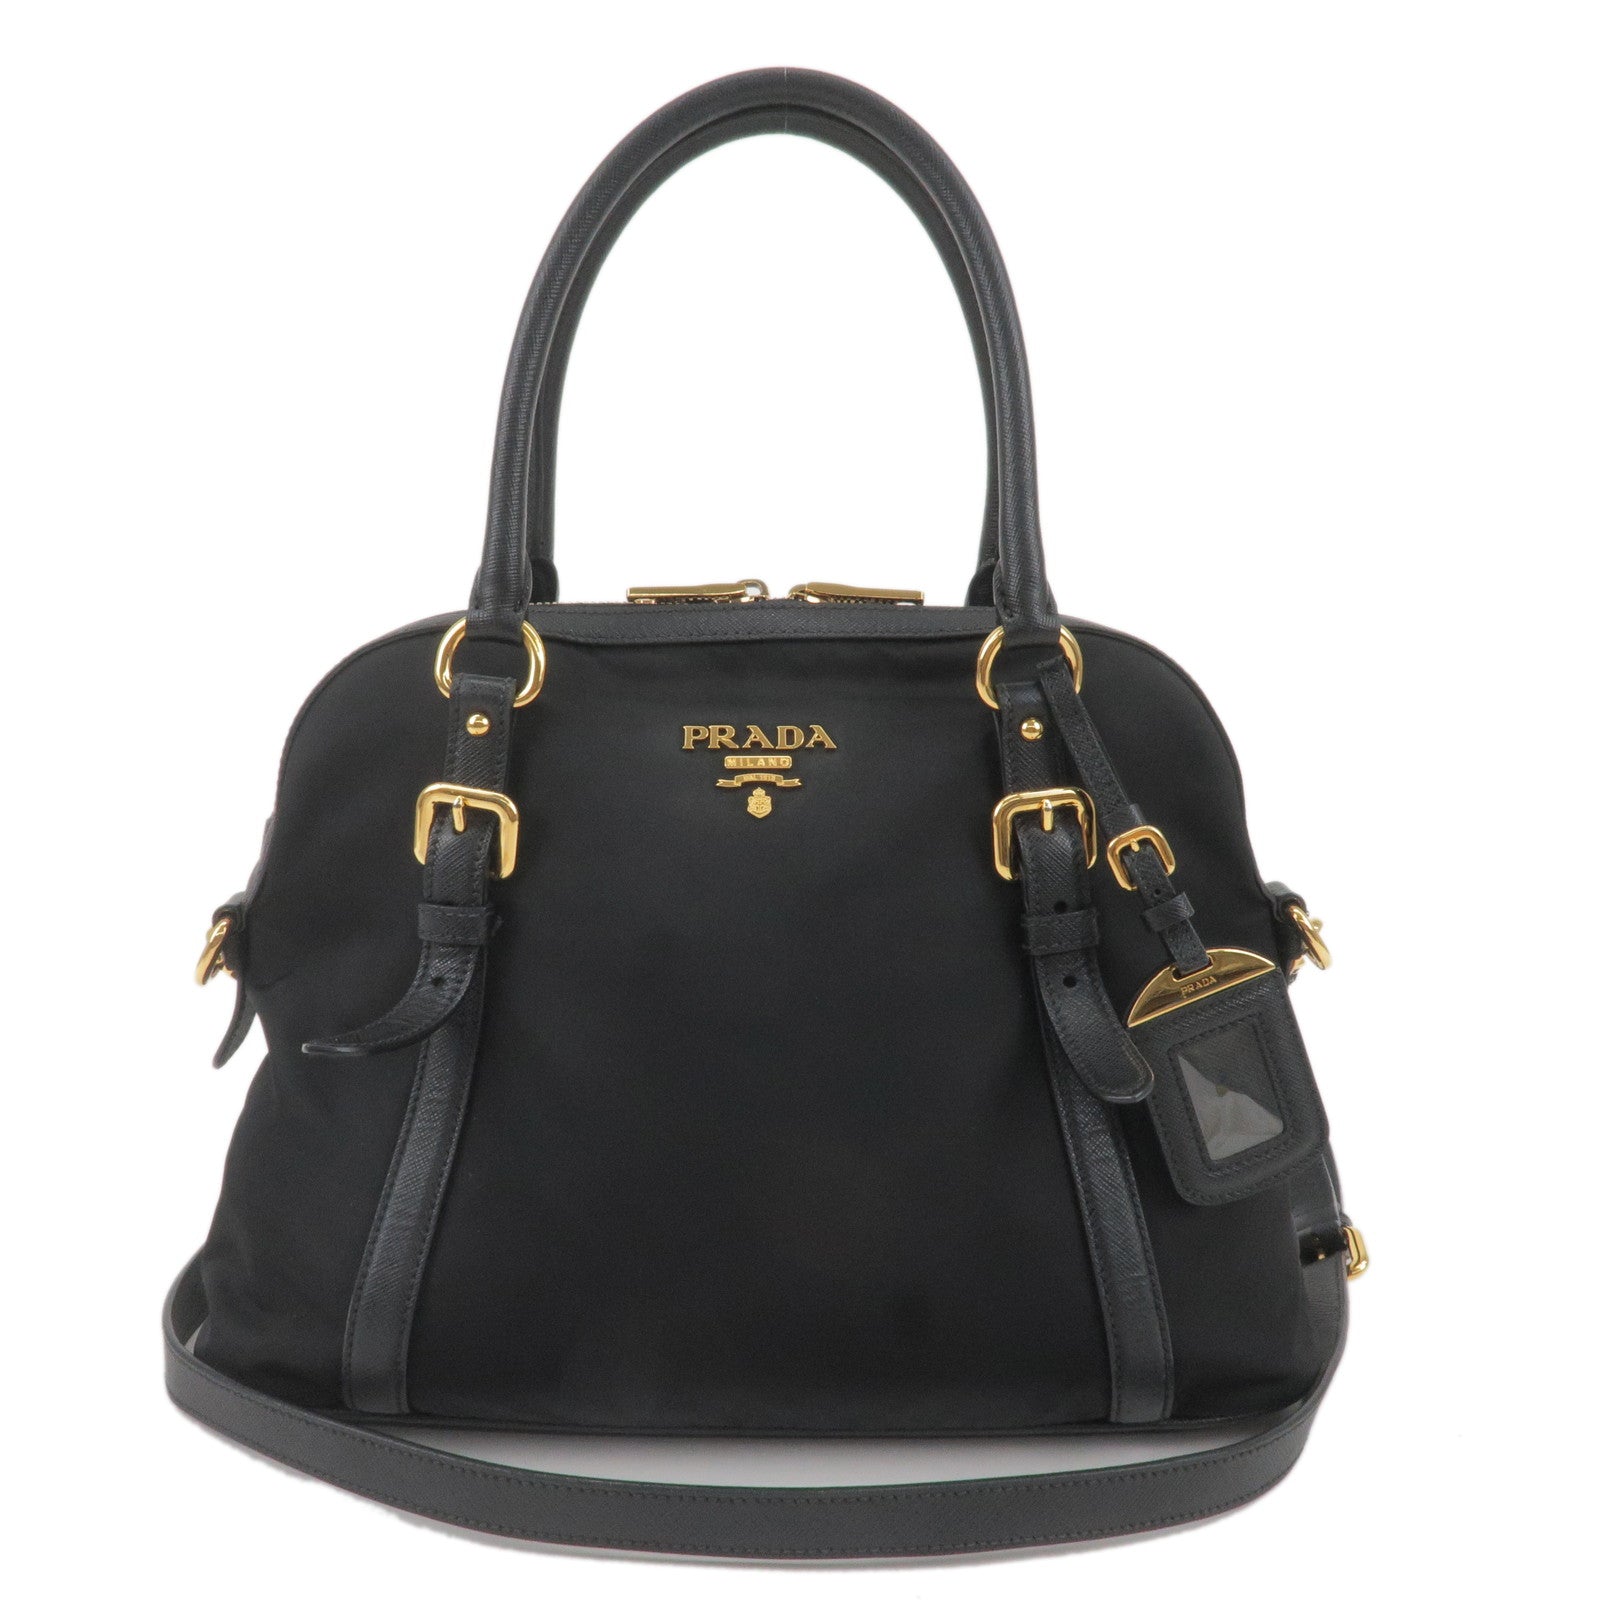 PRADA-Logo-Nylon-Leather-2Way-Bag-Hand-Bag-Shoulder-Bag-Black